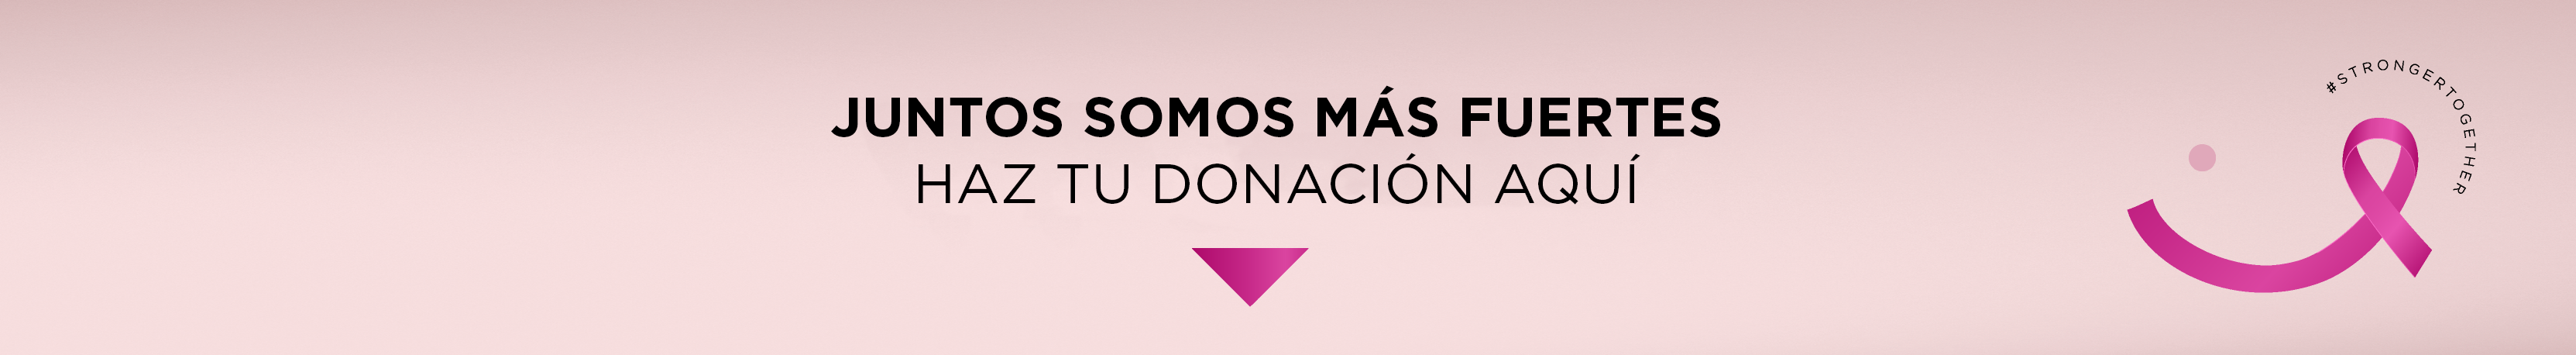 header-donativo_es.png